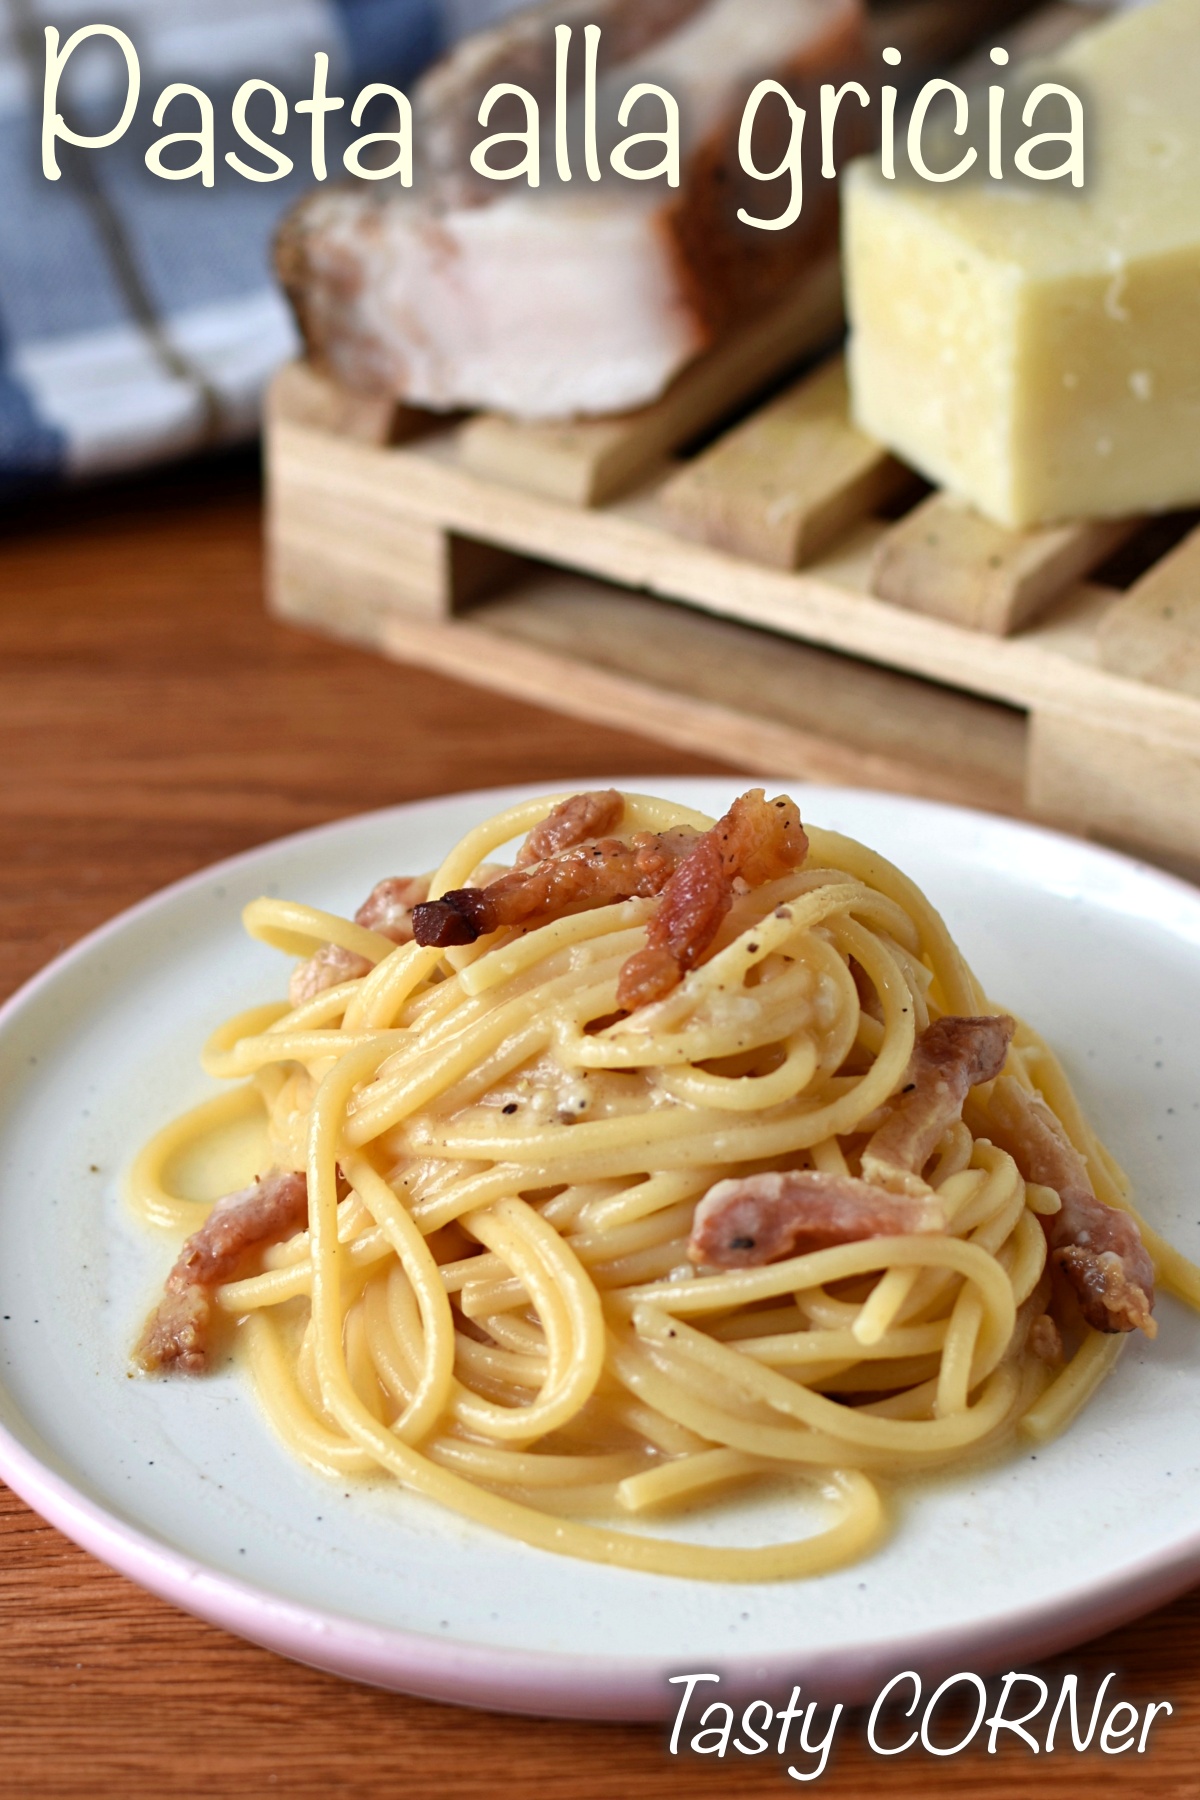 en_v_ authentic pasta alla gricia italian recipe spaghetti or rigatoni with bacon and cheese by tasty corner blog